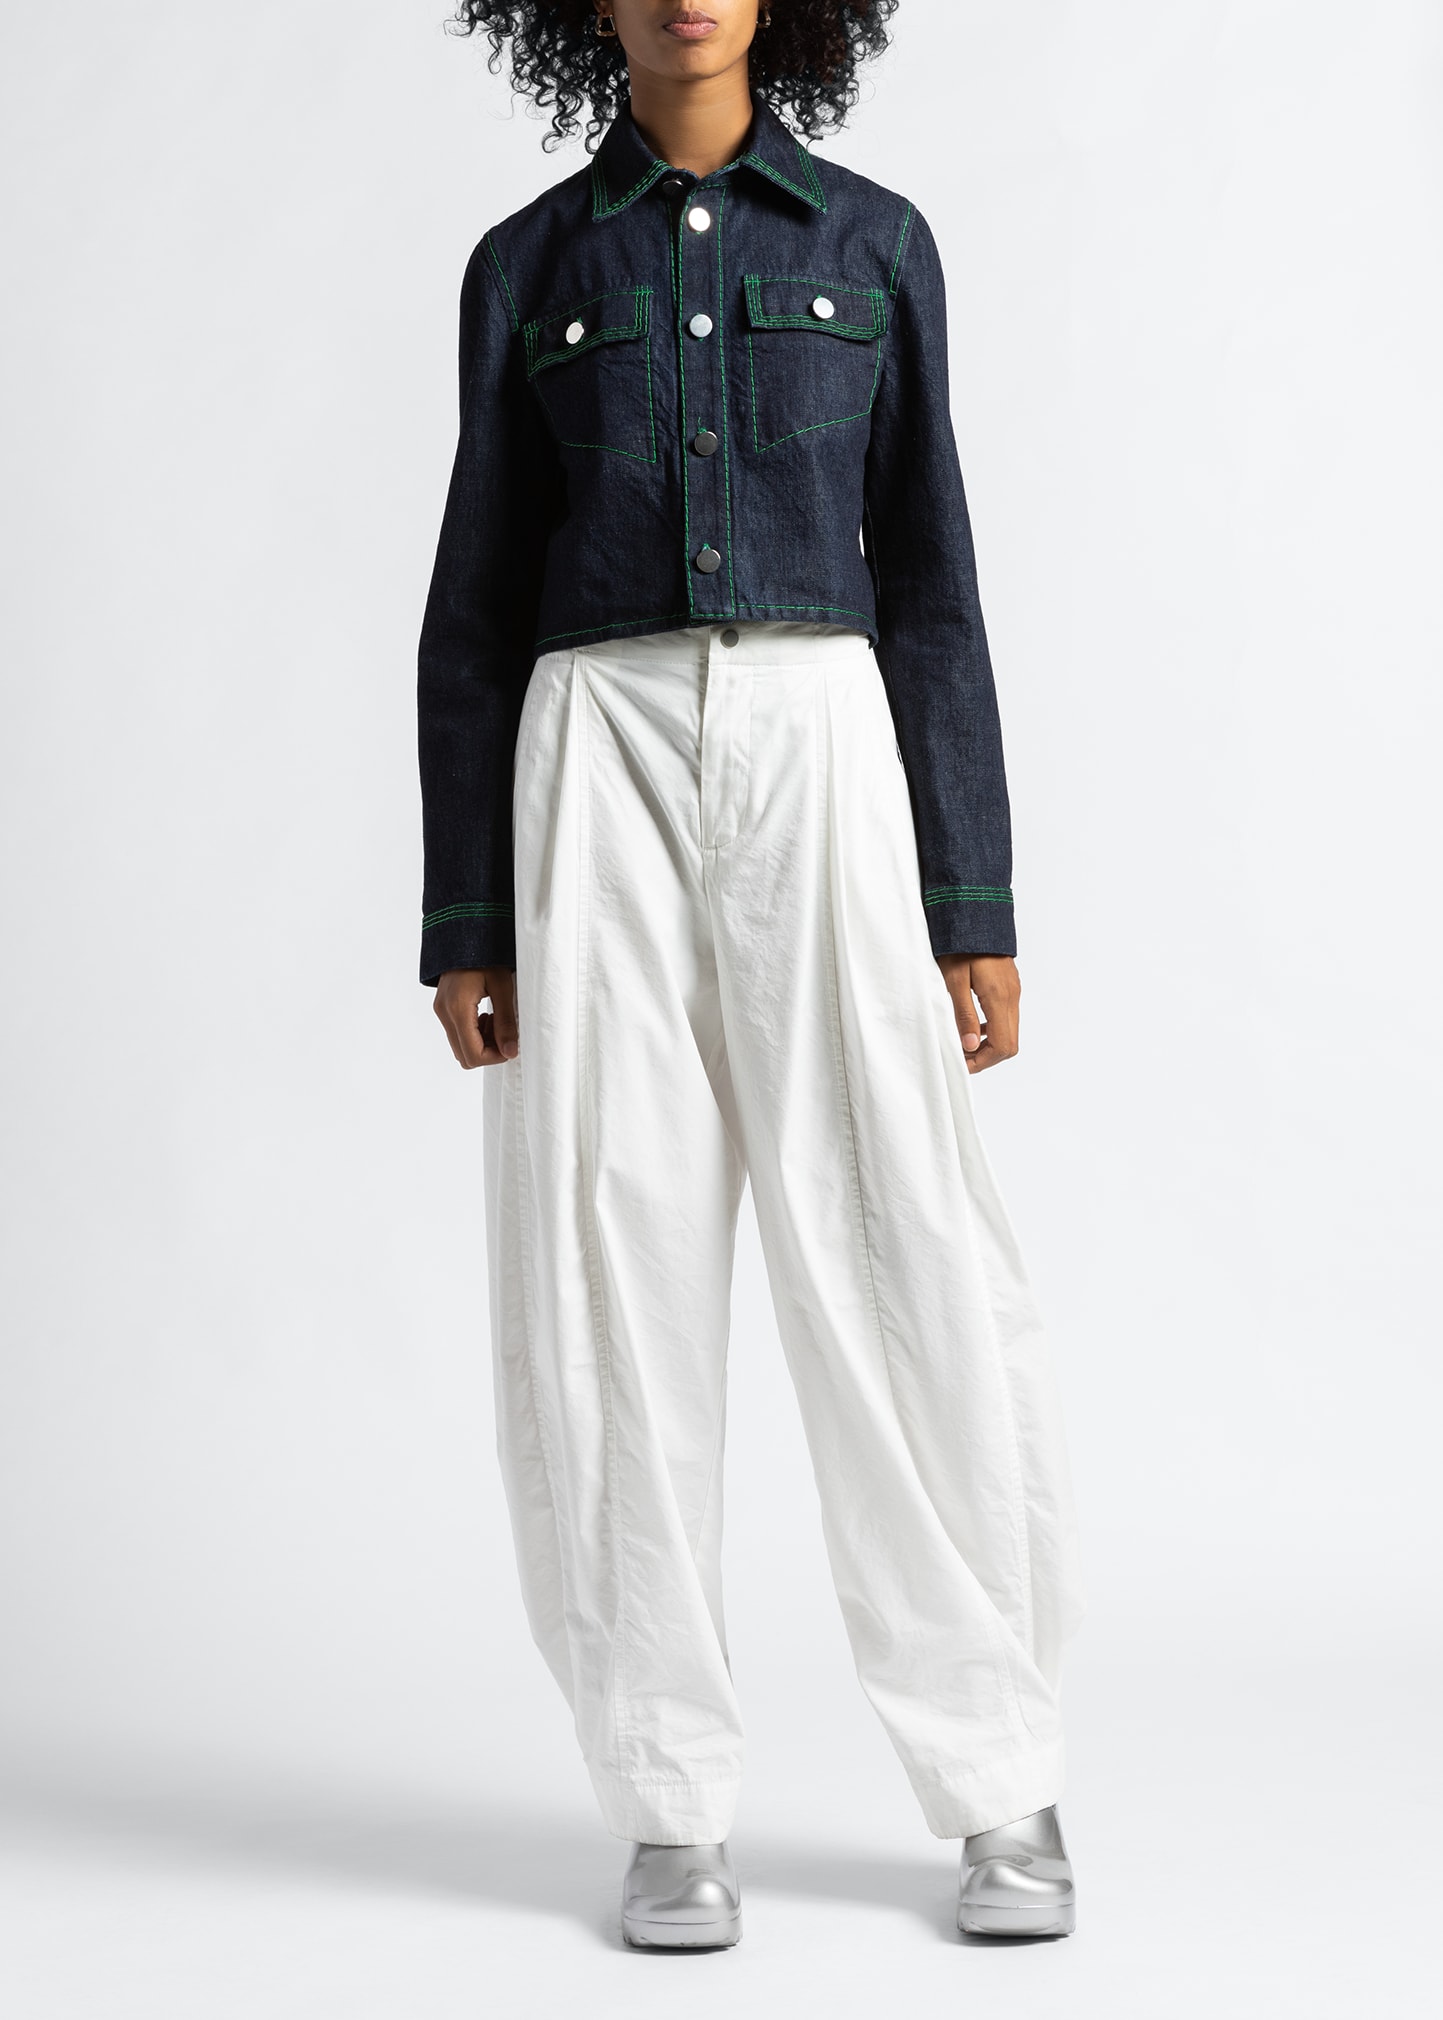 Bottega Veneta Short Contrast-Stitch Denim Jacket